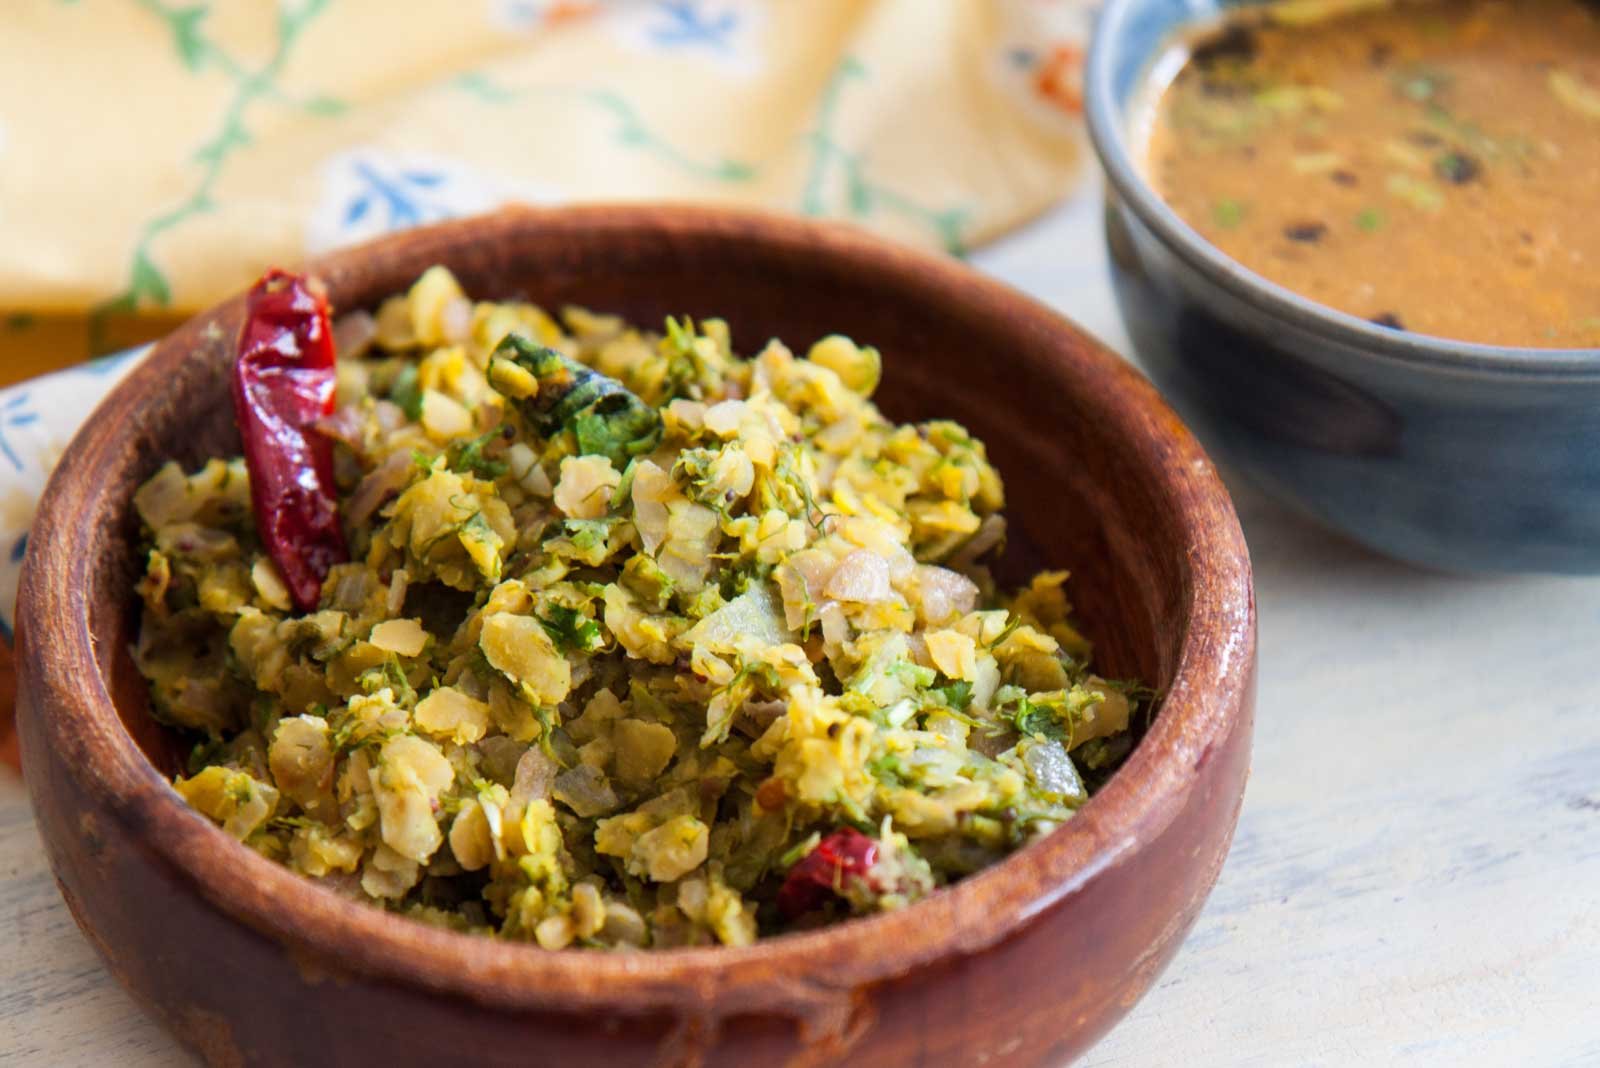 Karnataka Style Bassaru Palya Recipe - Toor Dal And Dill Leaves Stir Fry